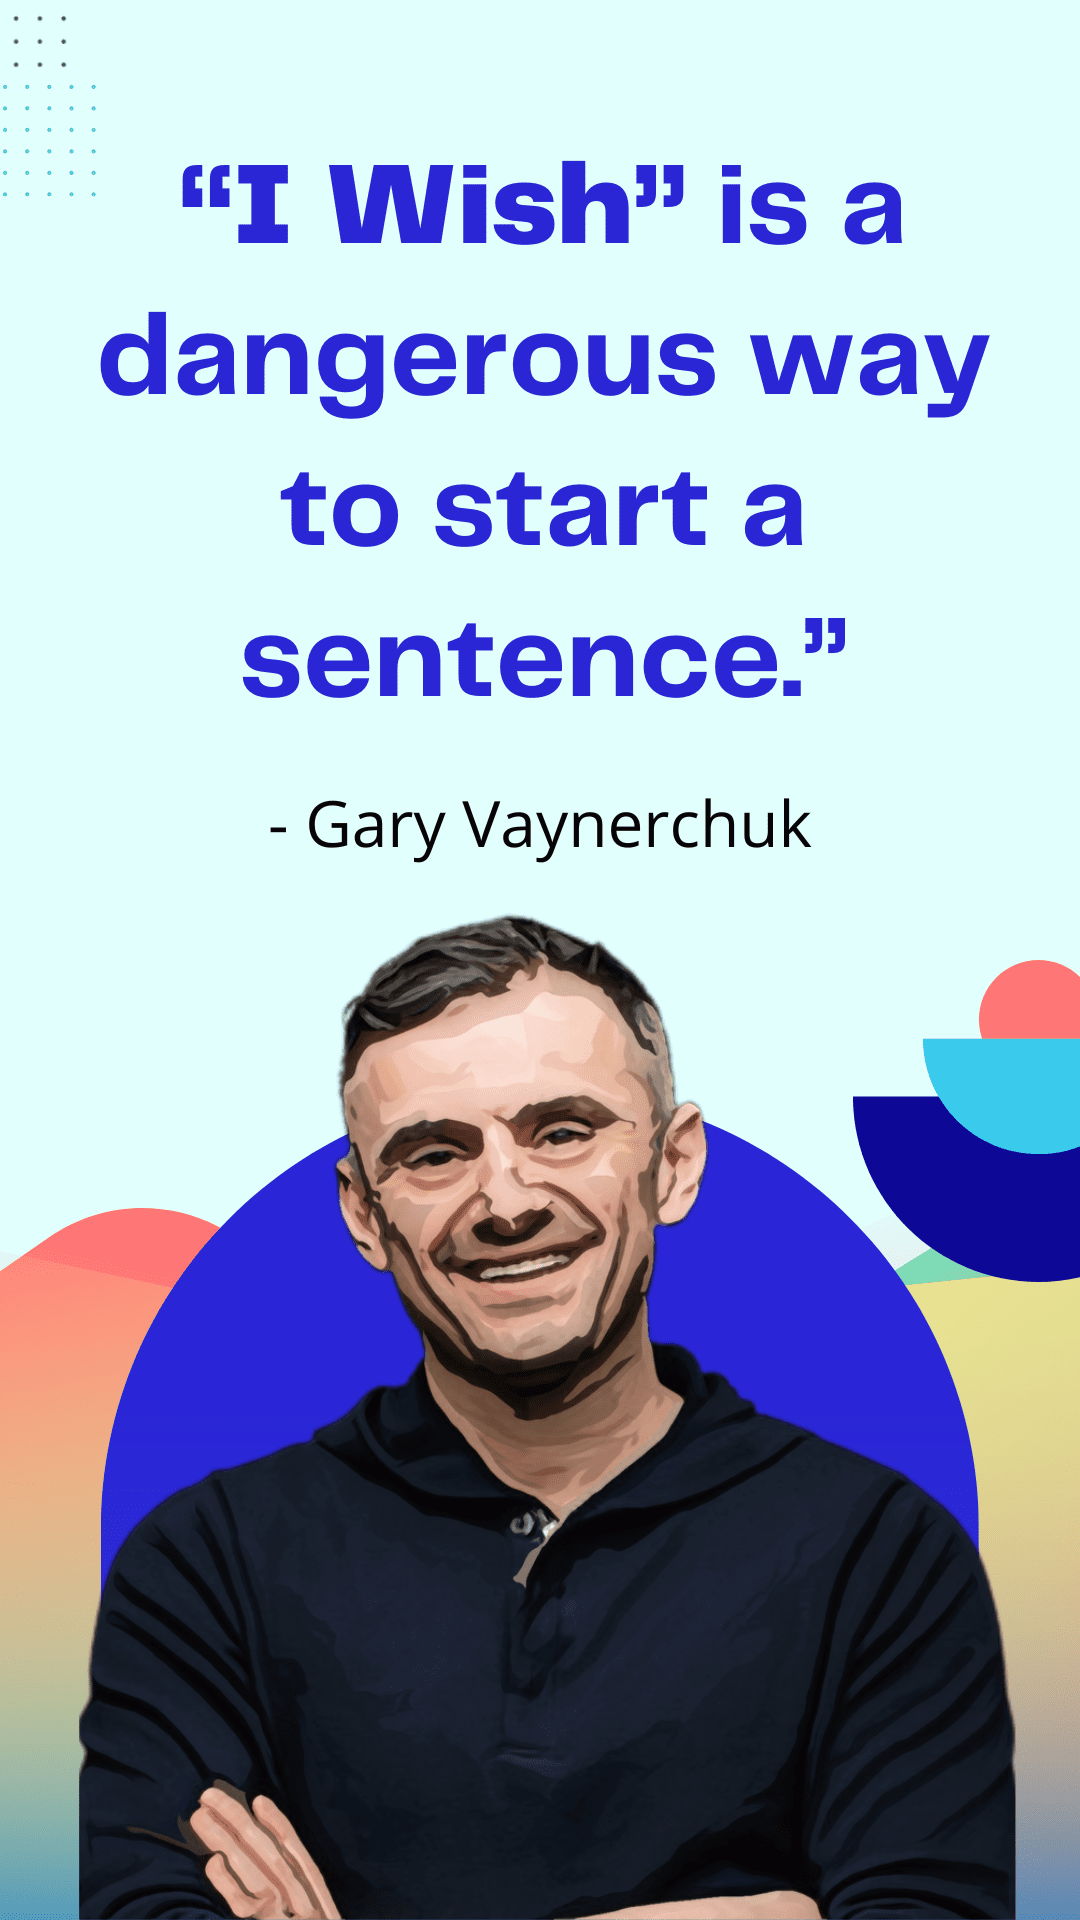 Gary Vaynerchuk quotes for motivation